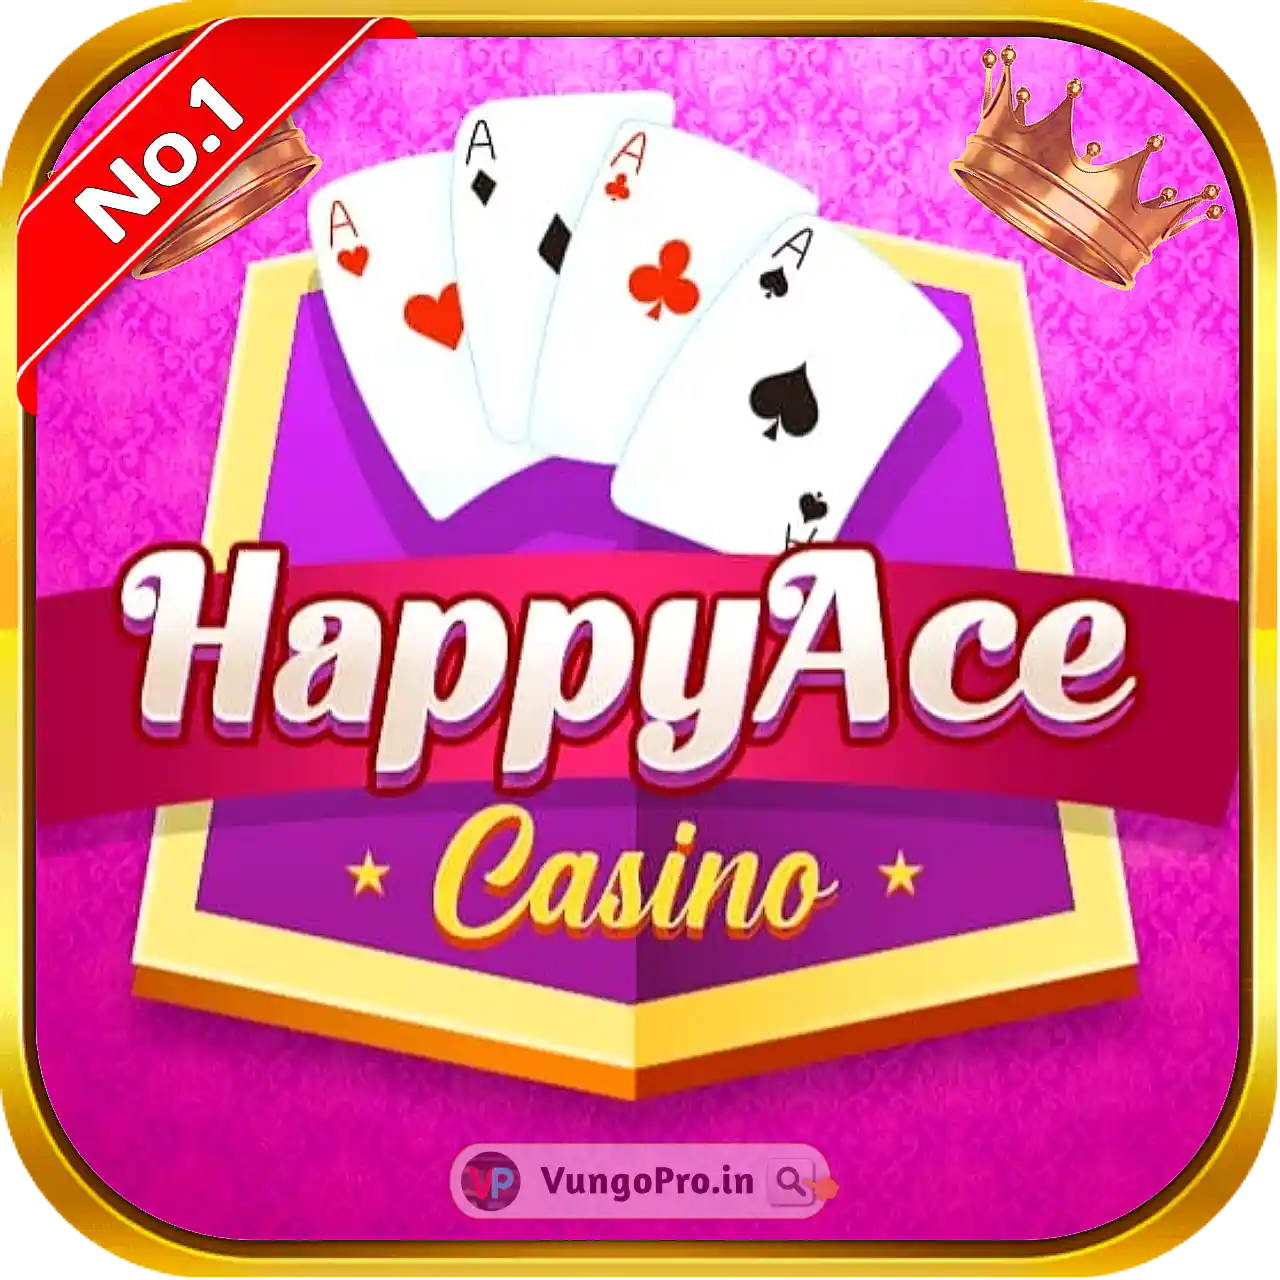 HappyAce Casino